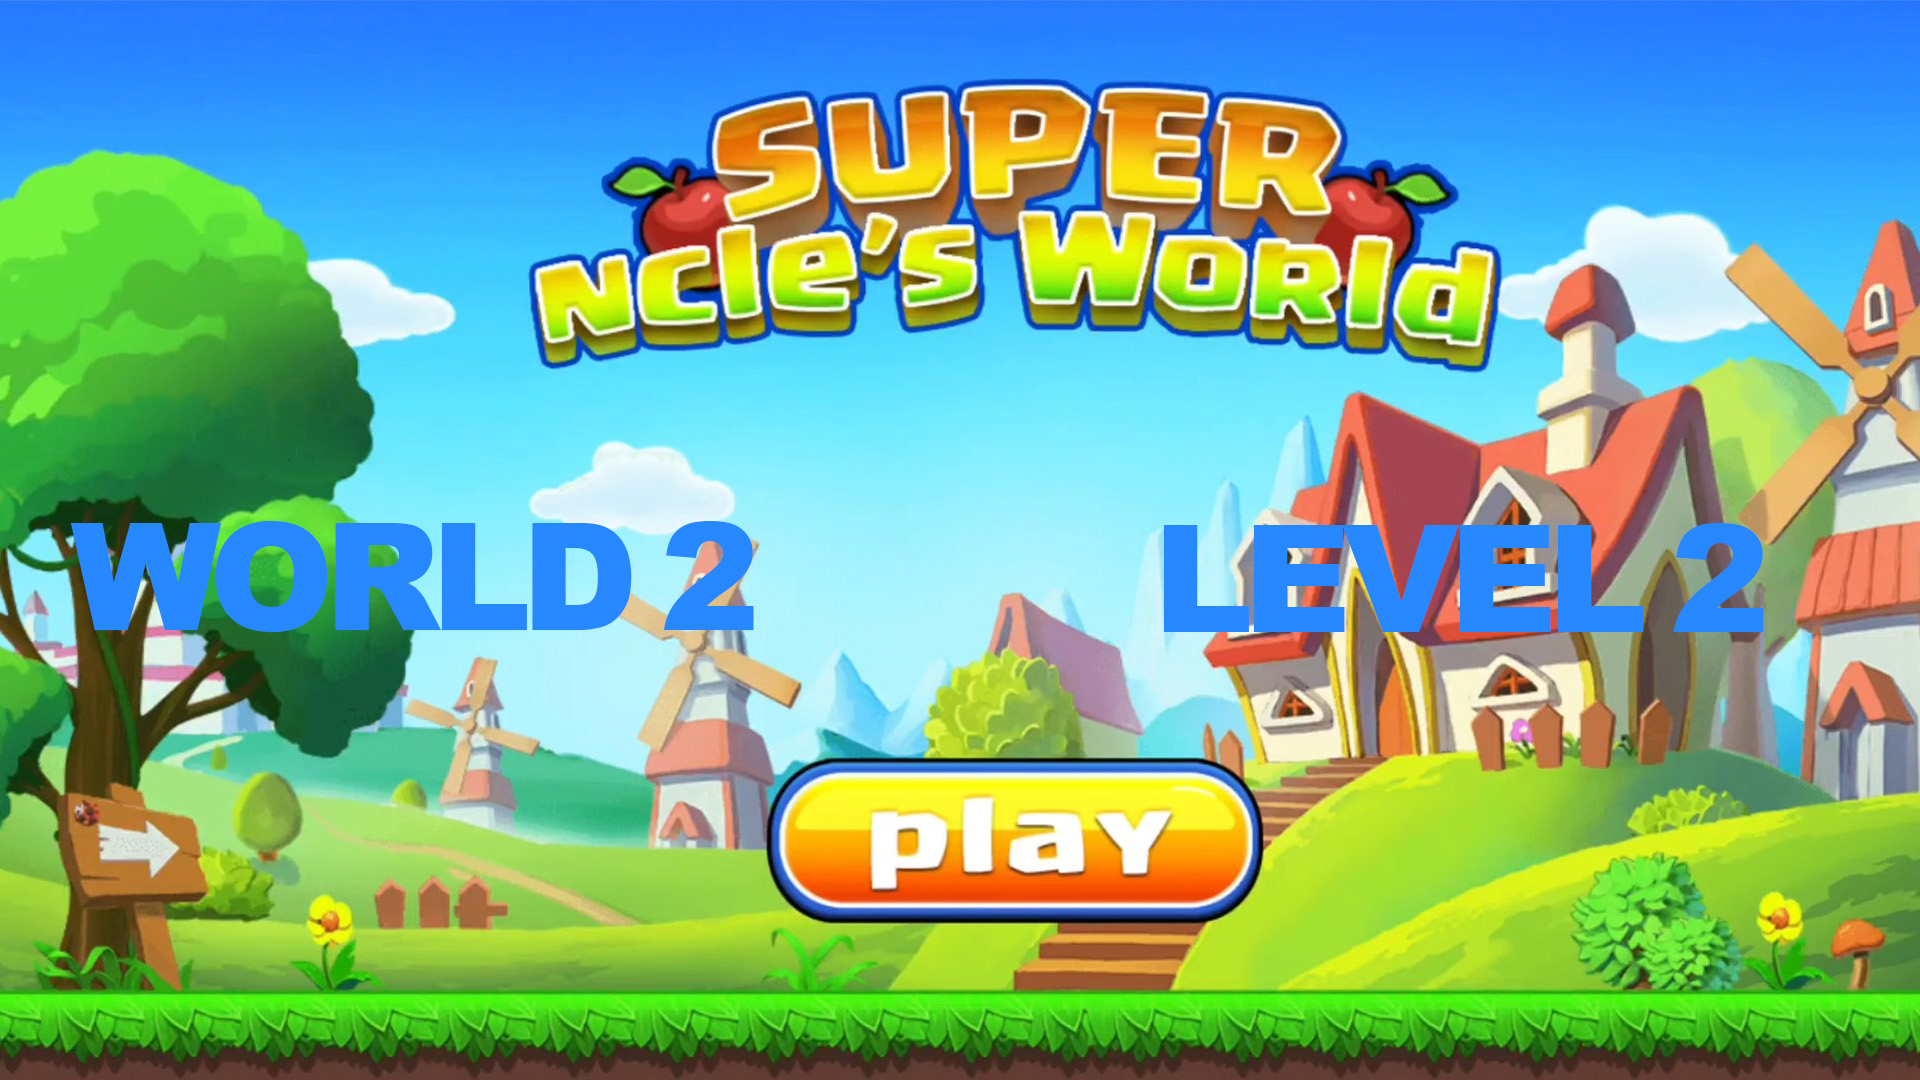 Super ncle's  World 2. levei 2.